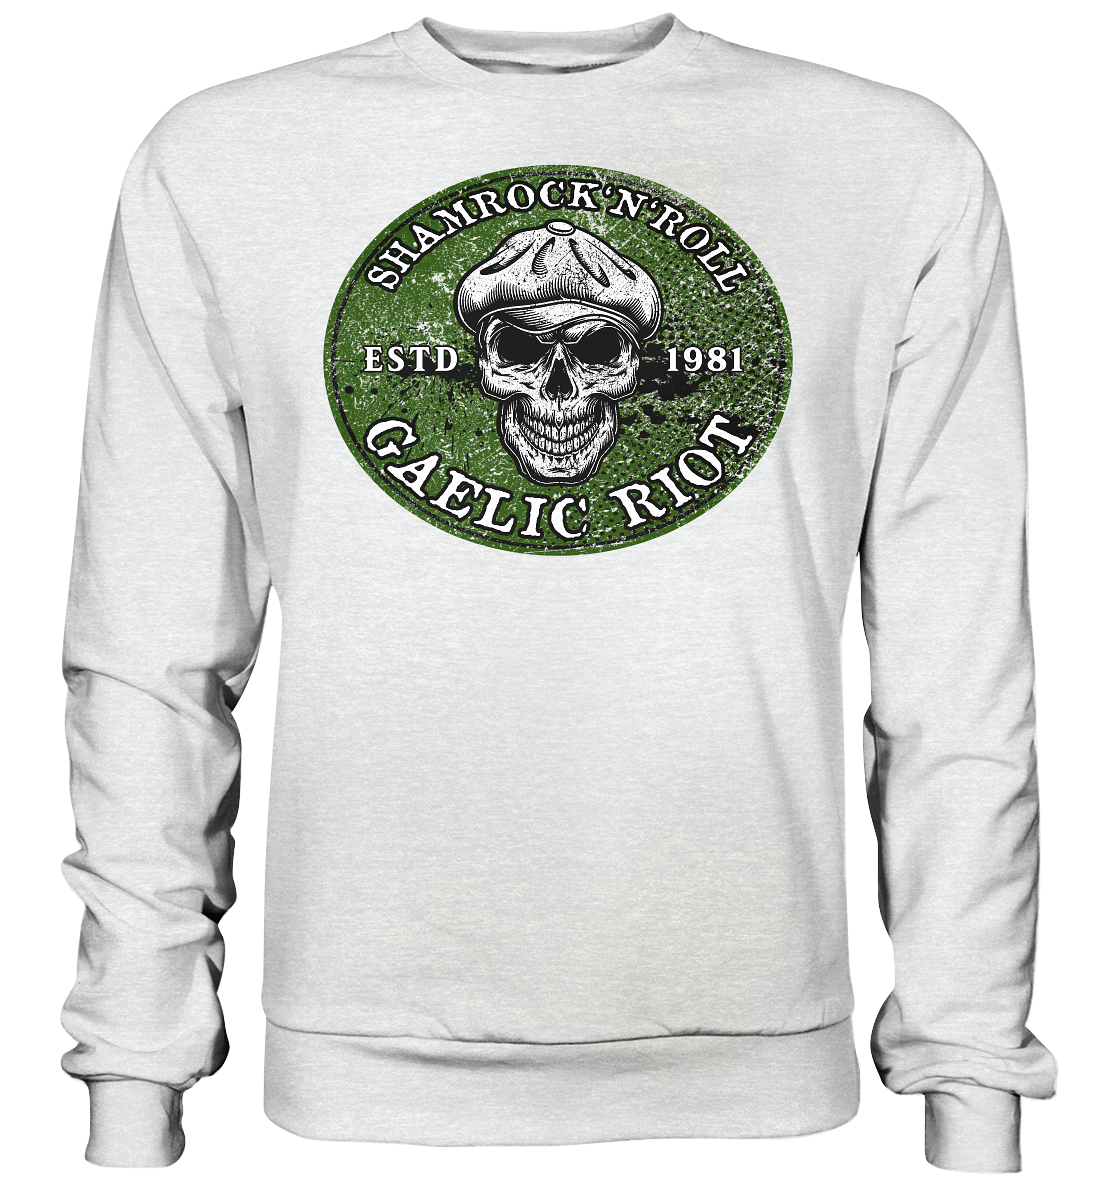 Shamrock And Roll "Skull / Gaelic Riot" - Premium Sweatshirt